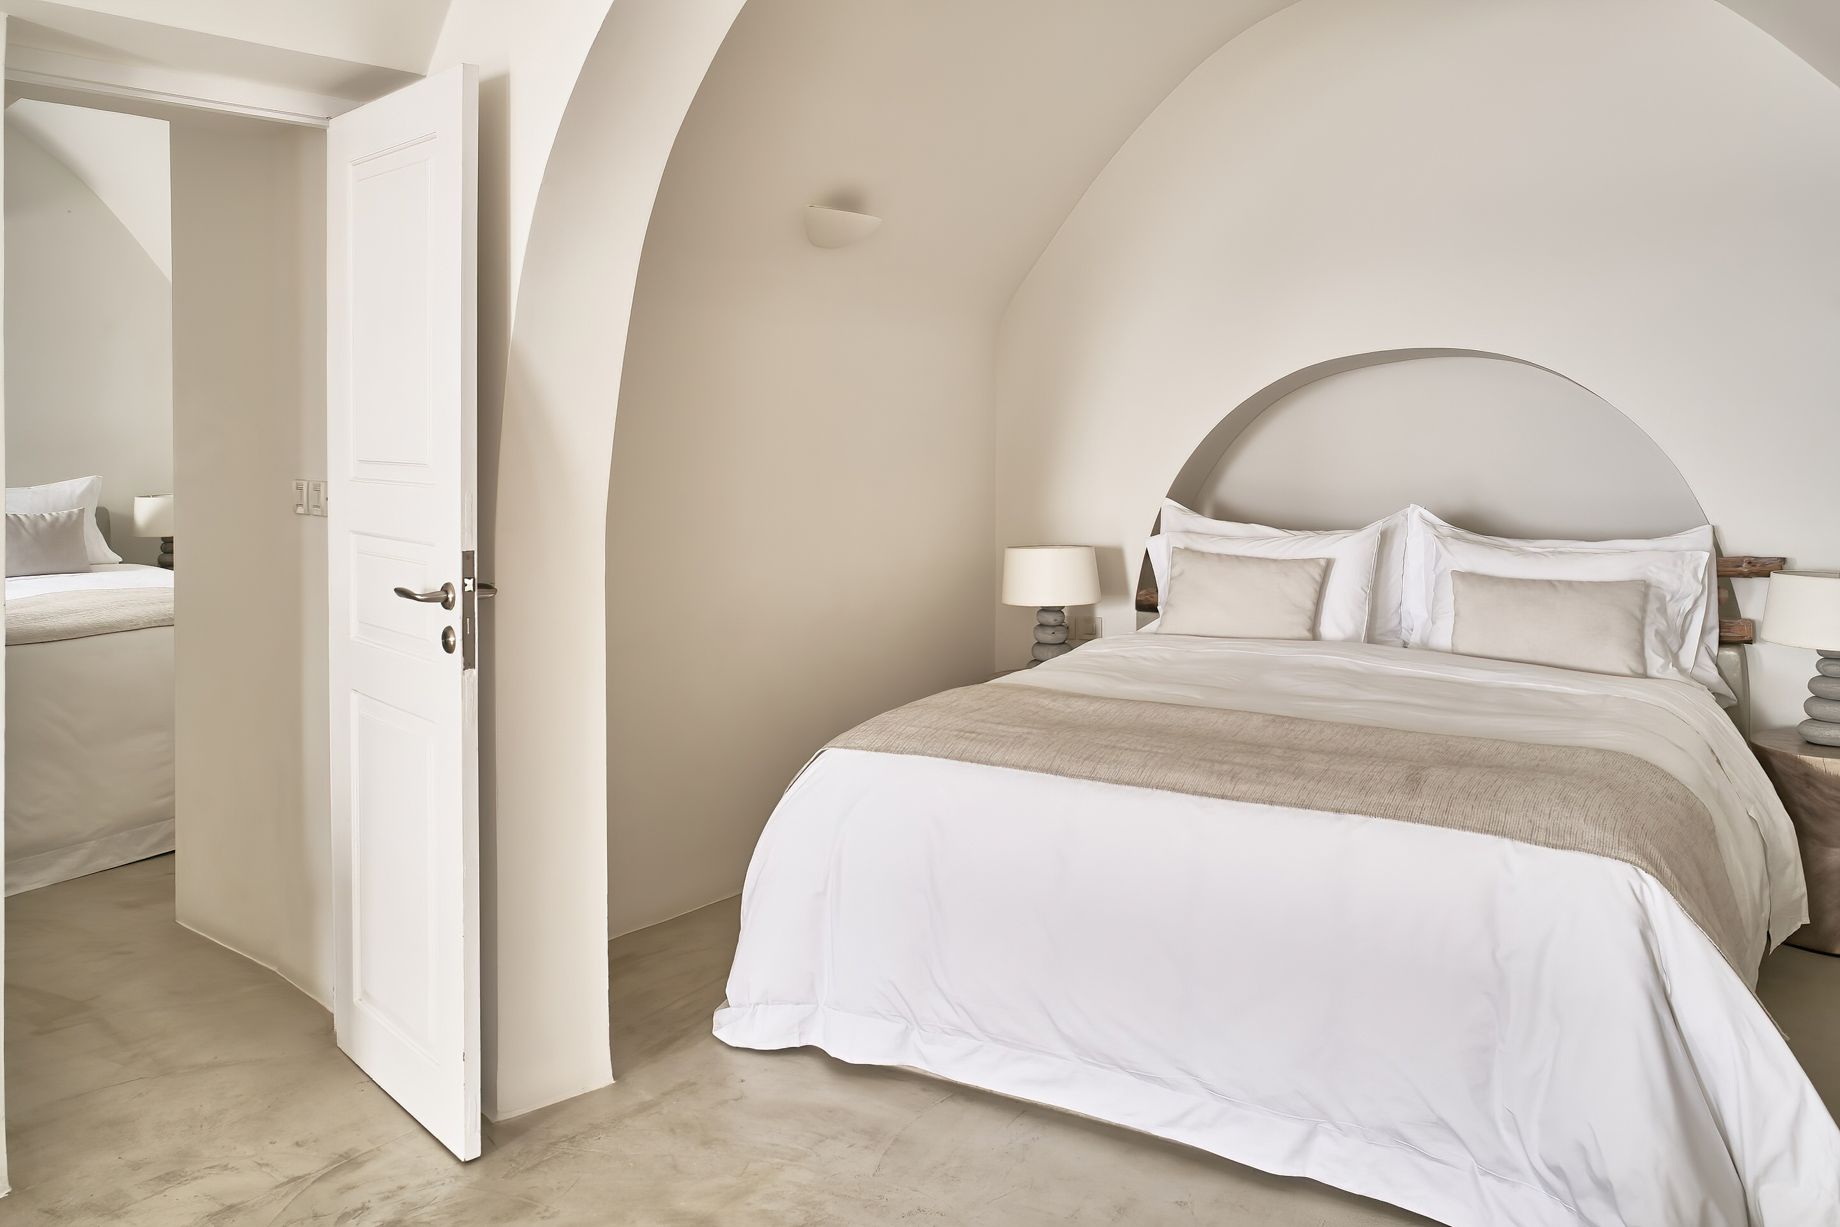 Mystique Hotel Santorini – Oia, Santorini Island, Greece – All2Senses Suite